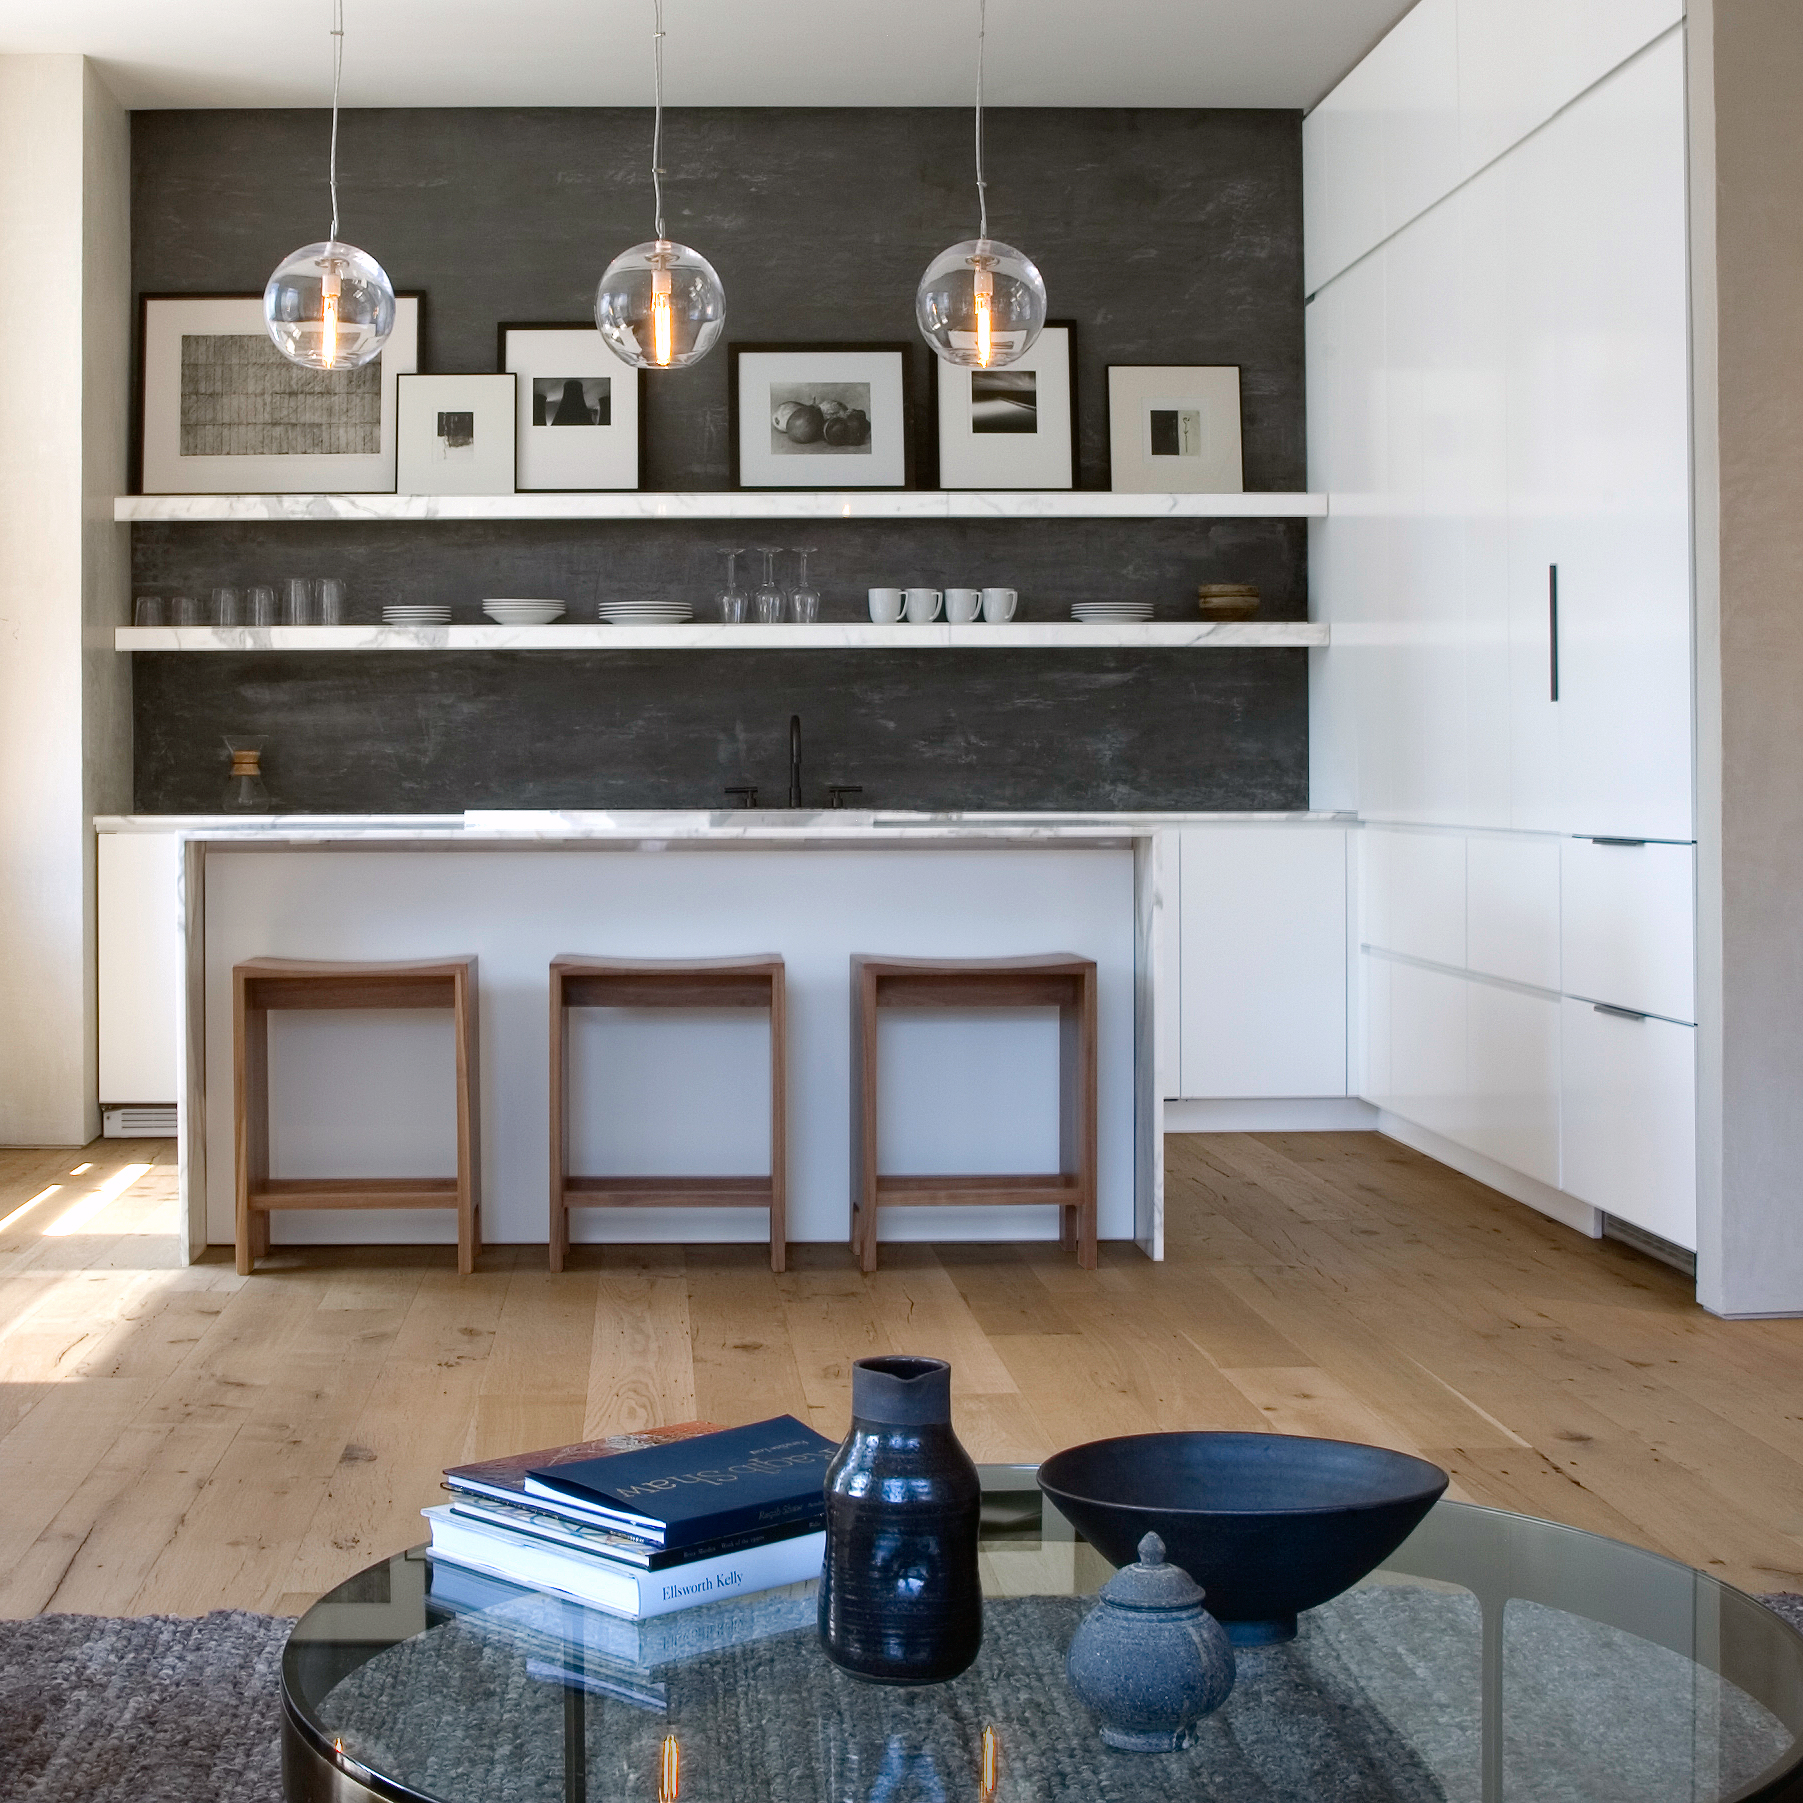 SoHo loft contemporary kitchen interior design by Jones Rowan Studio.